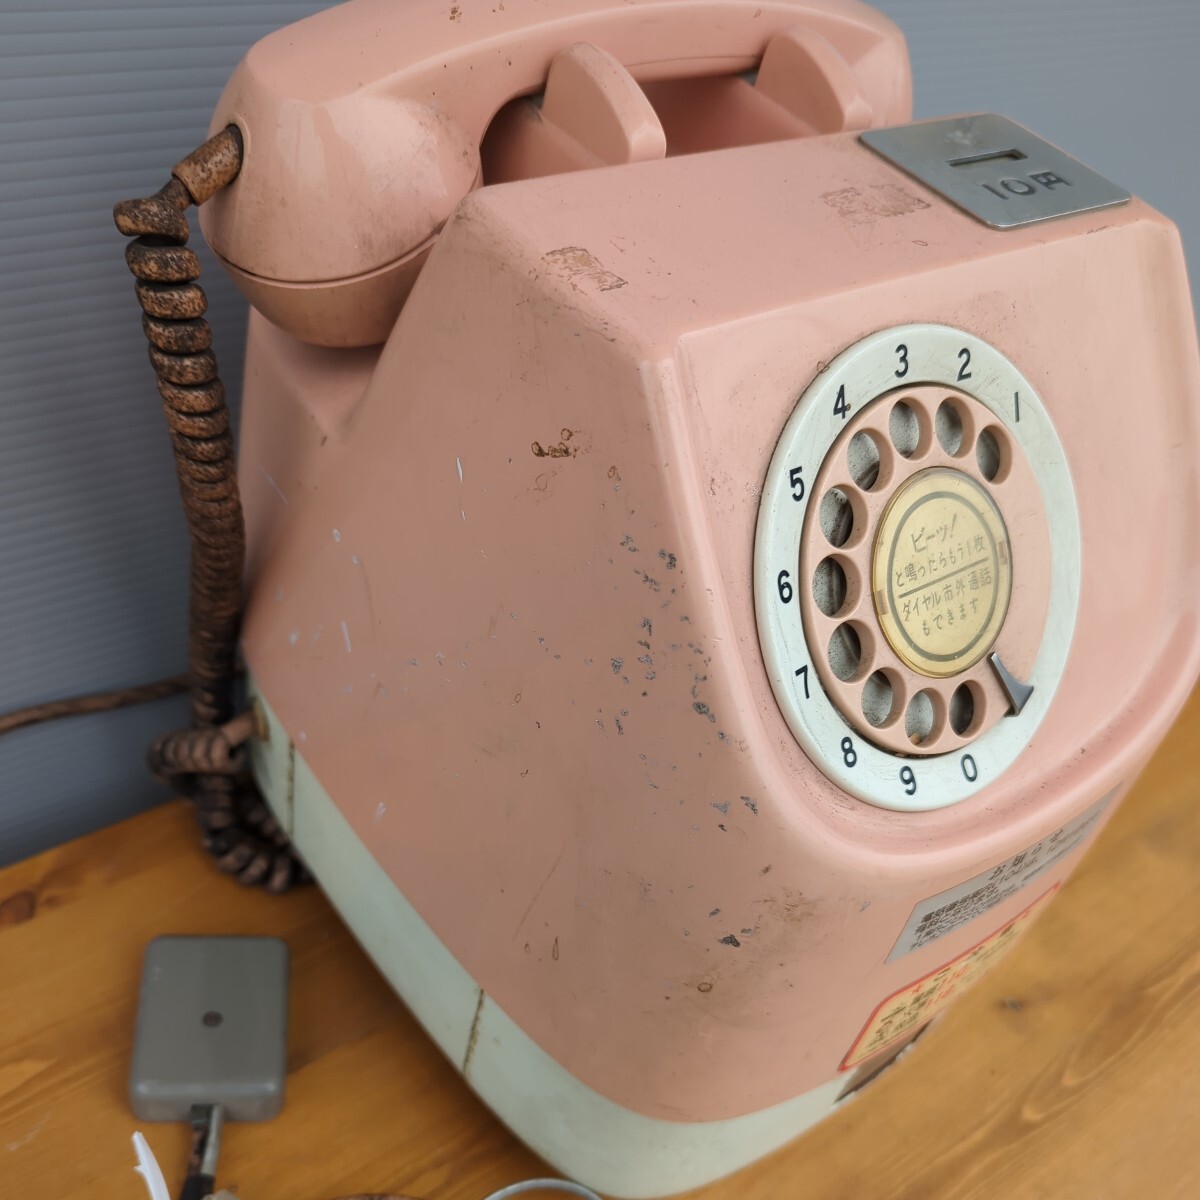  public telephone Showa Retro dial type that time thing antique pink telephone telephone machine retro Japan electro- confidence telephone 